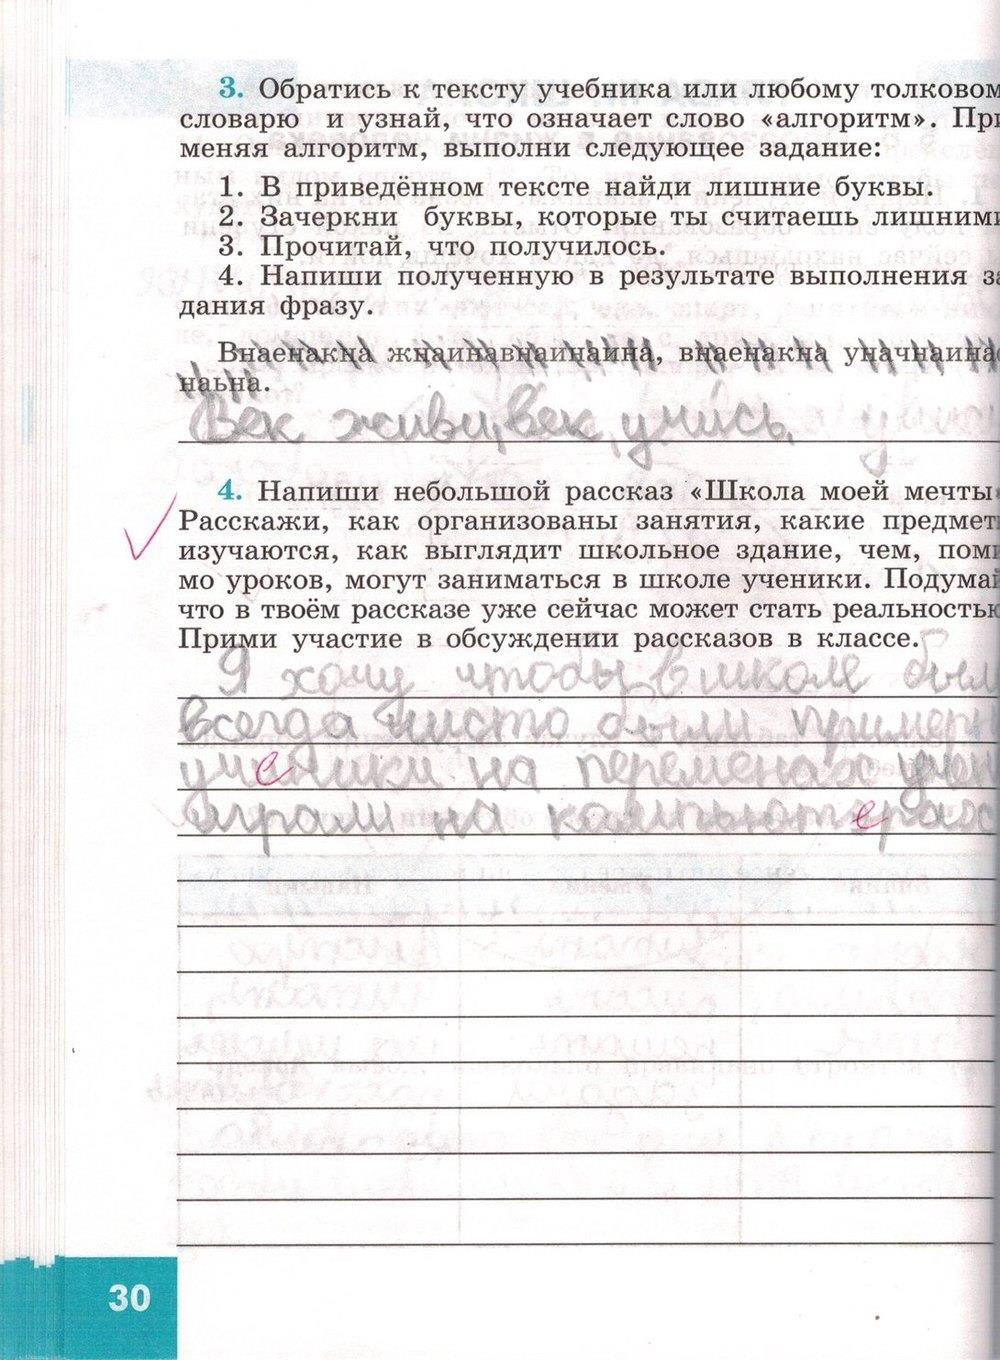 гдз 5 класс рабочая тетрадь страница 30 обществознание Иванова, Хотеенкова